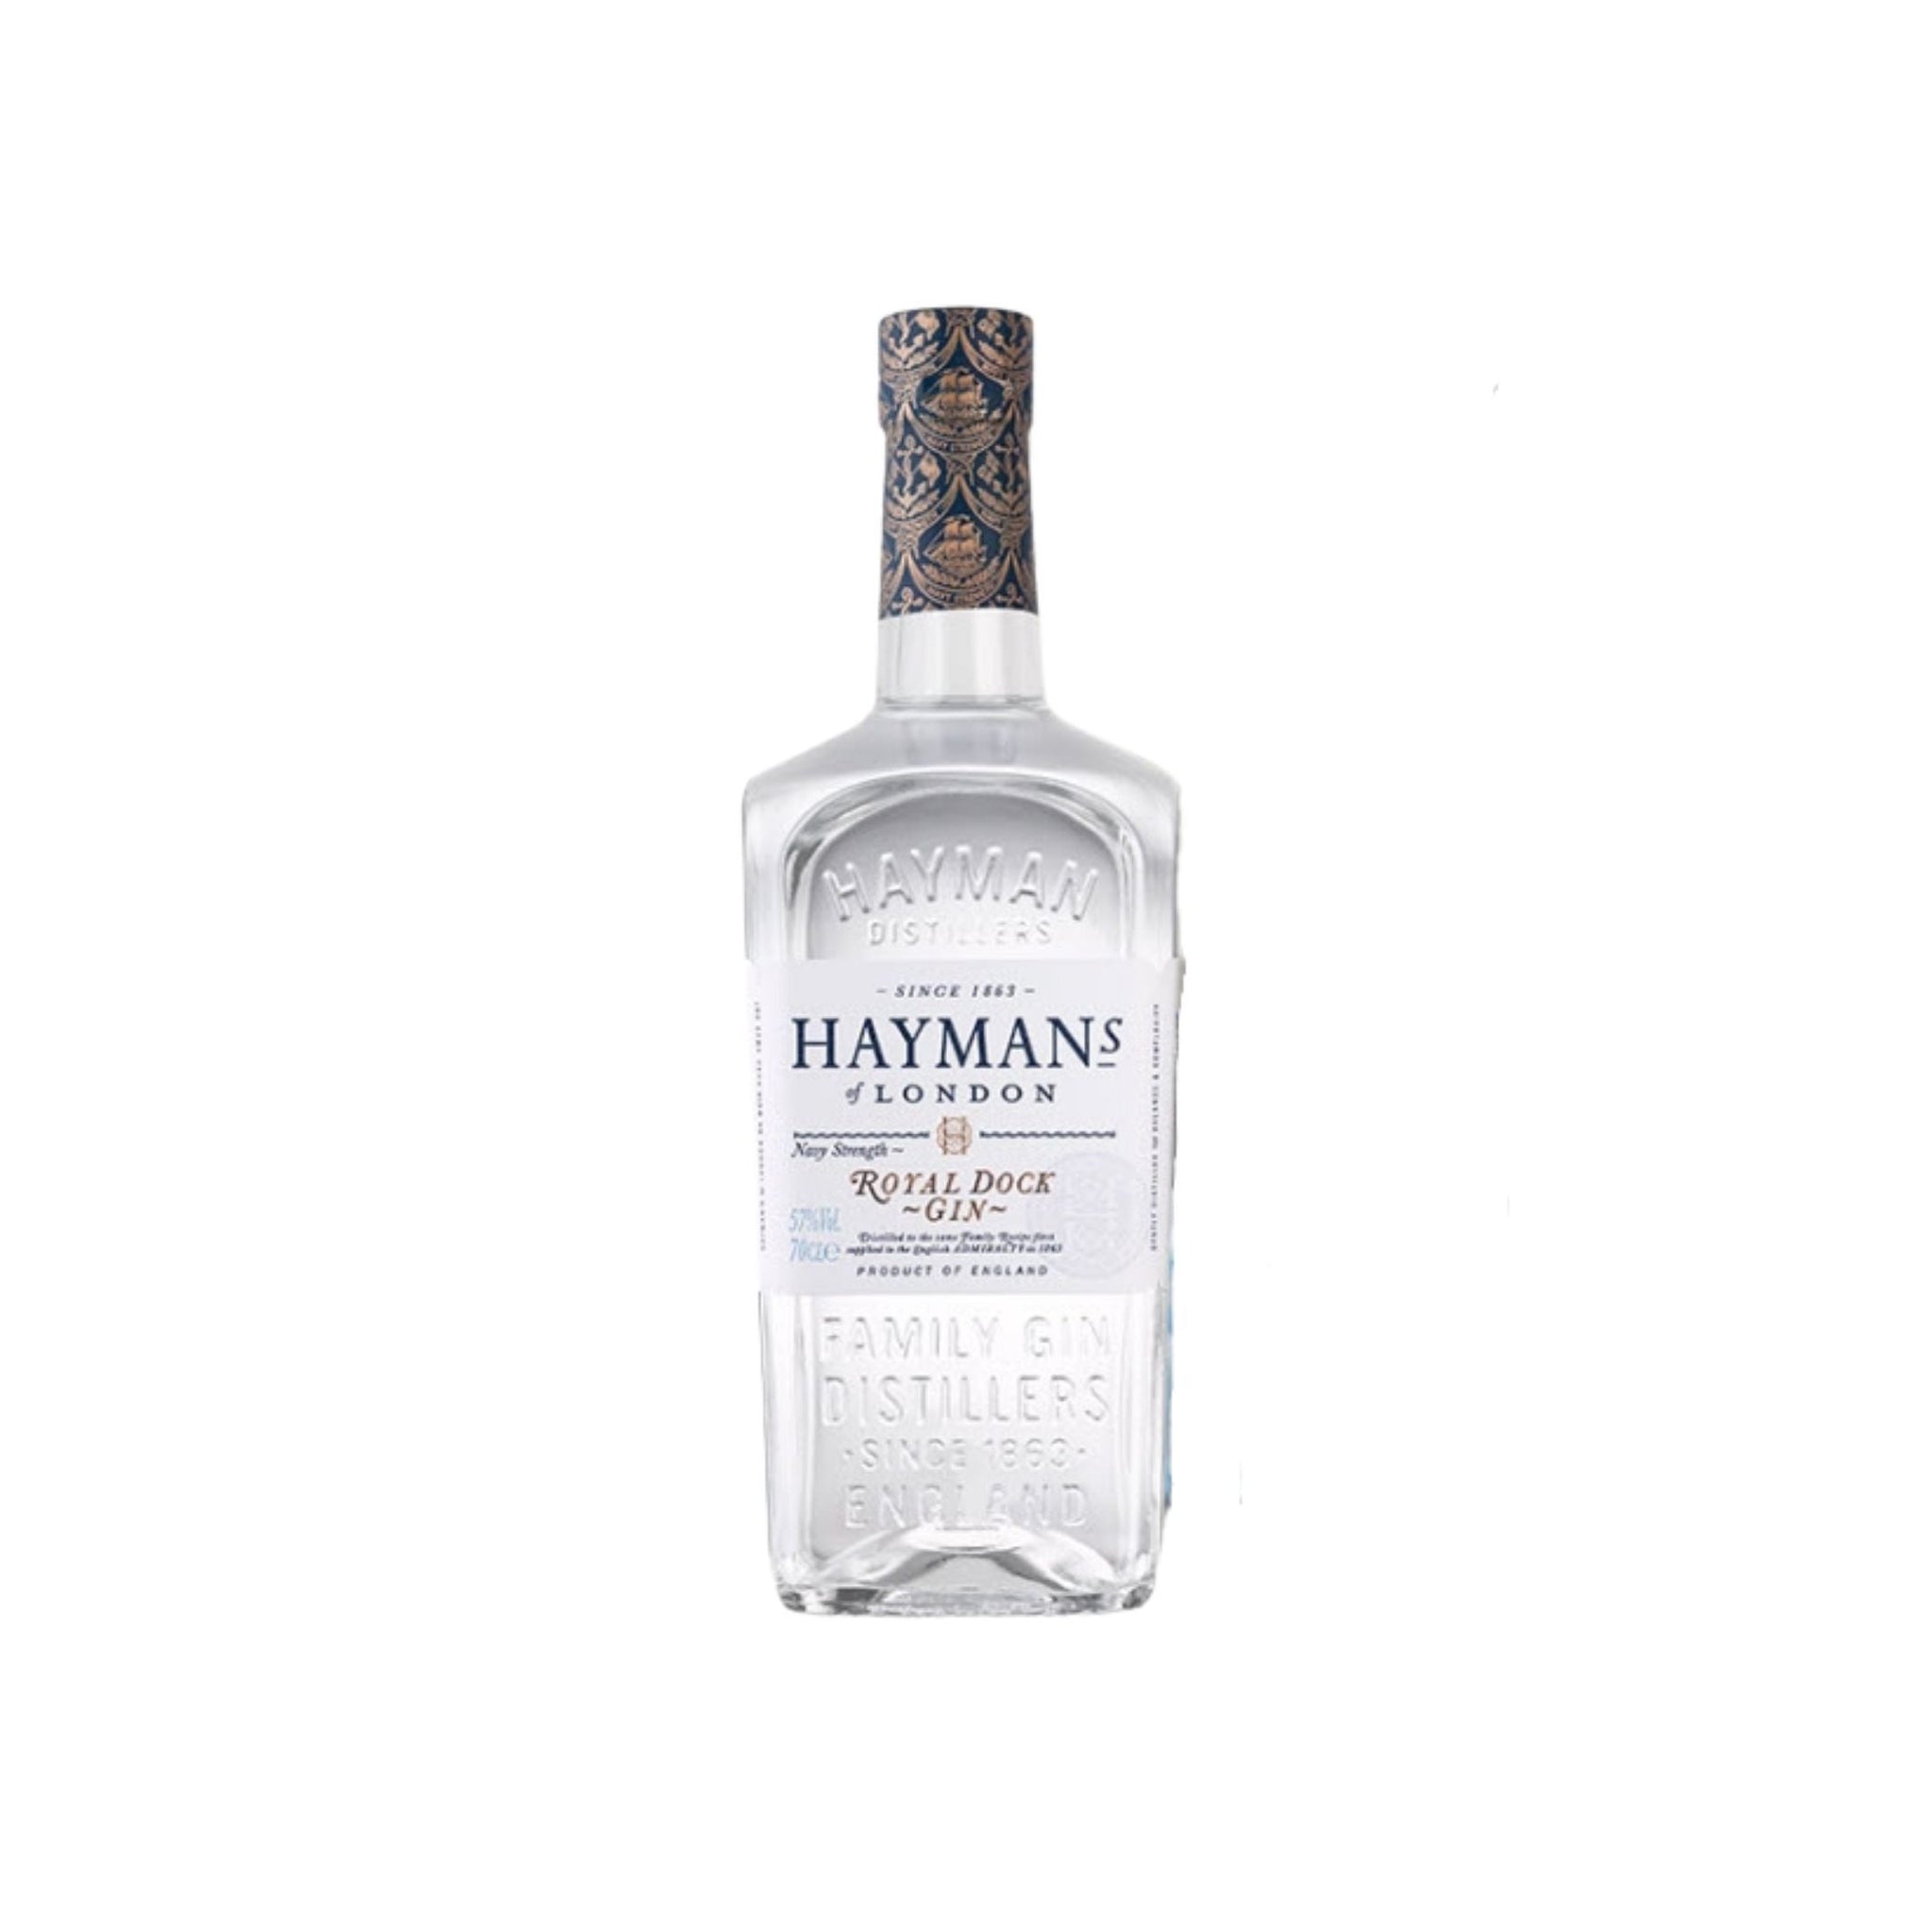 Hayman's Royal Dock Navy Strength Gin 114 Proof750ml